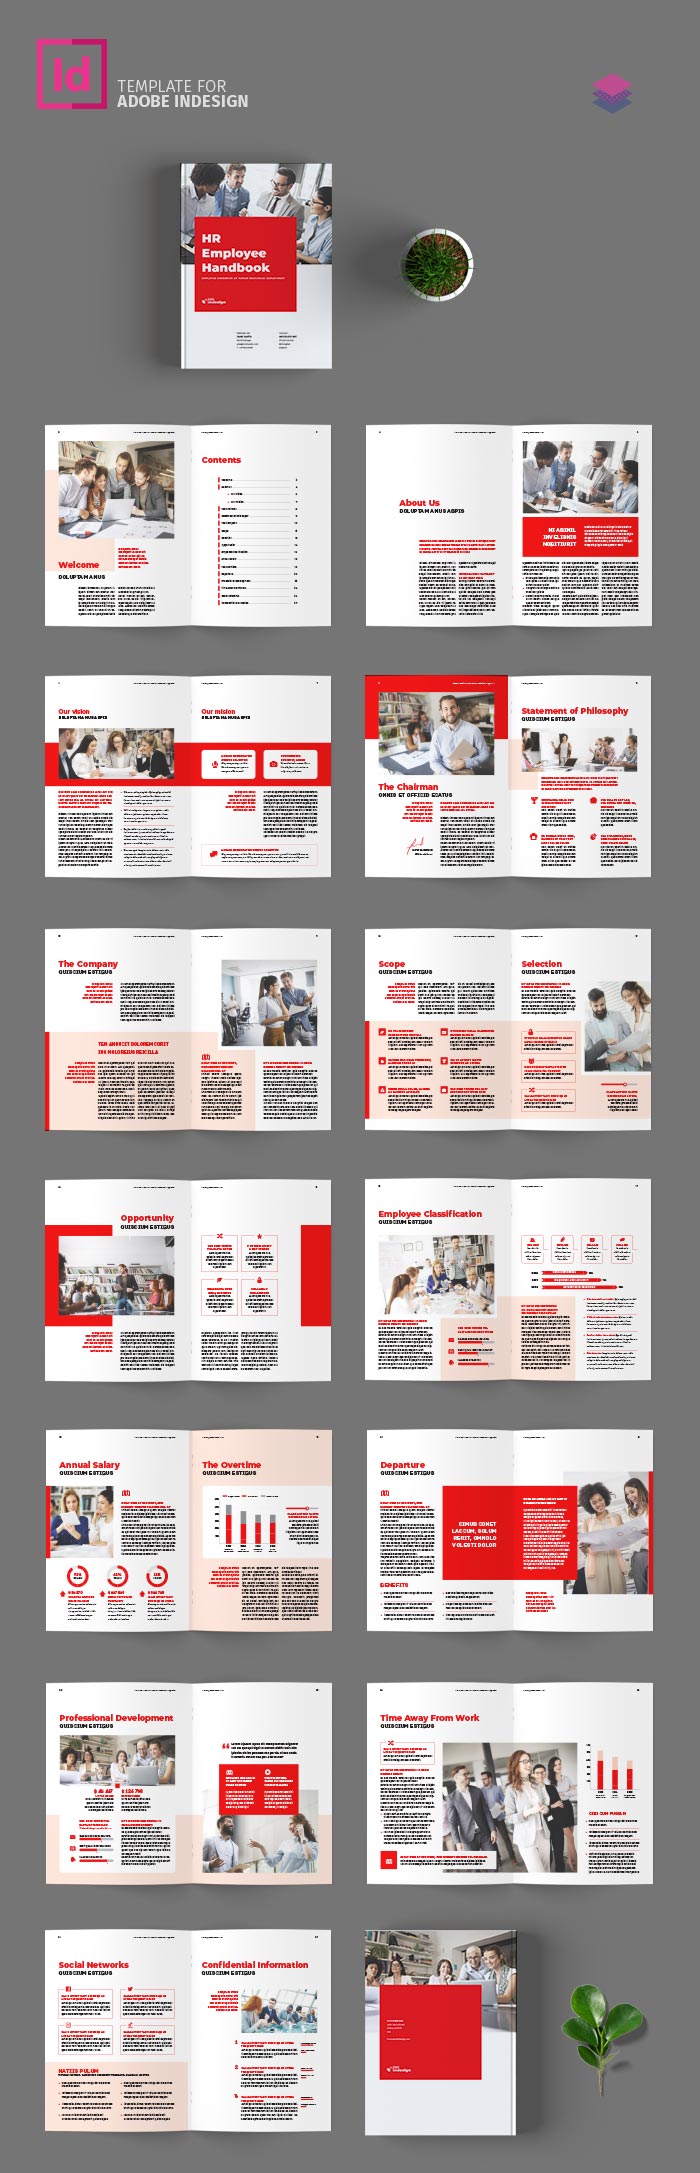 HR / Employee Handbook Template for Adobe InDesign